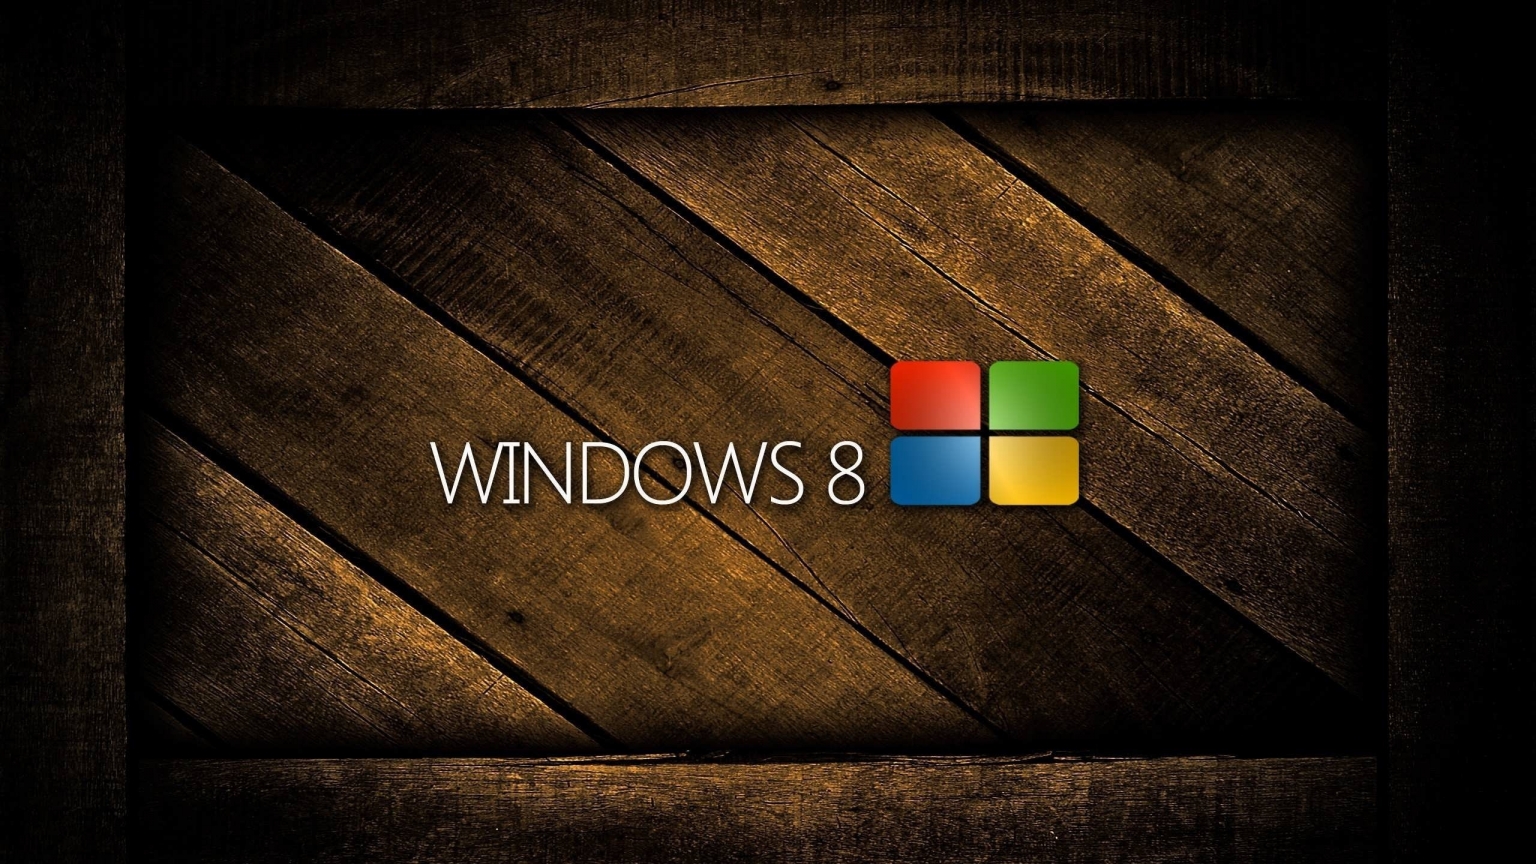 Windows 8 Wood for 1536 x 864 HDTV resolution